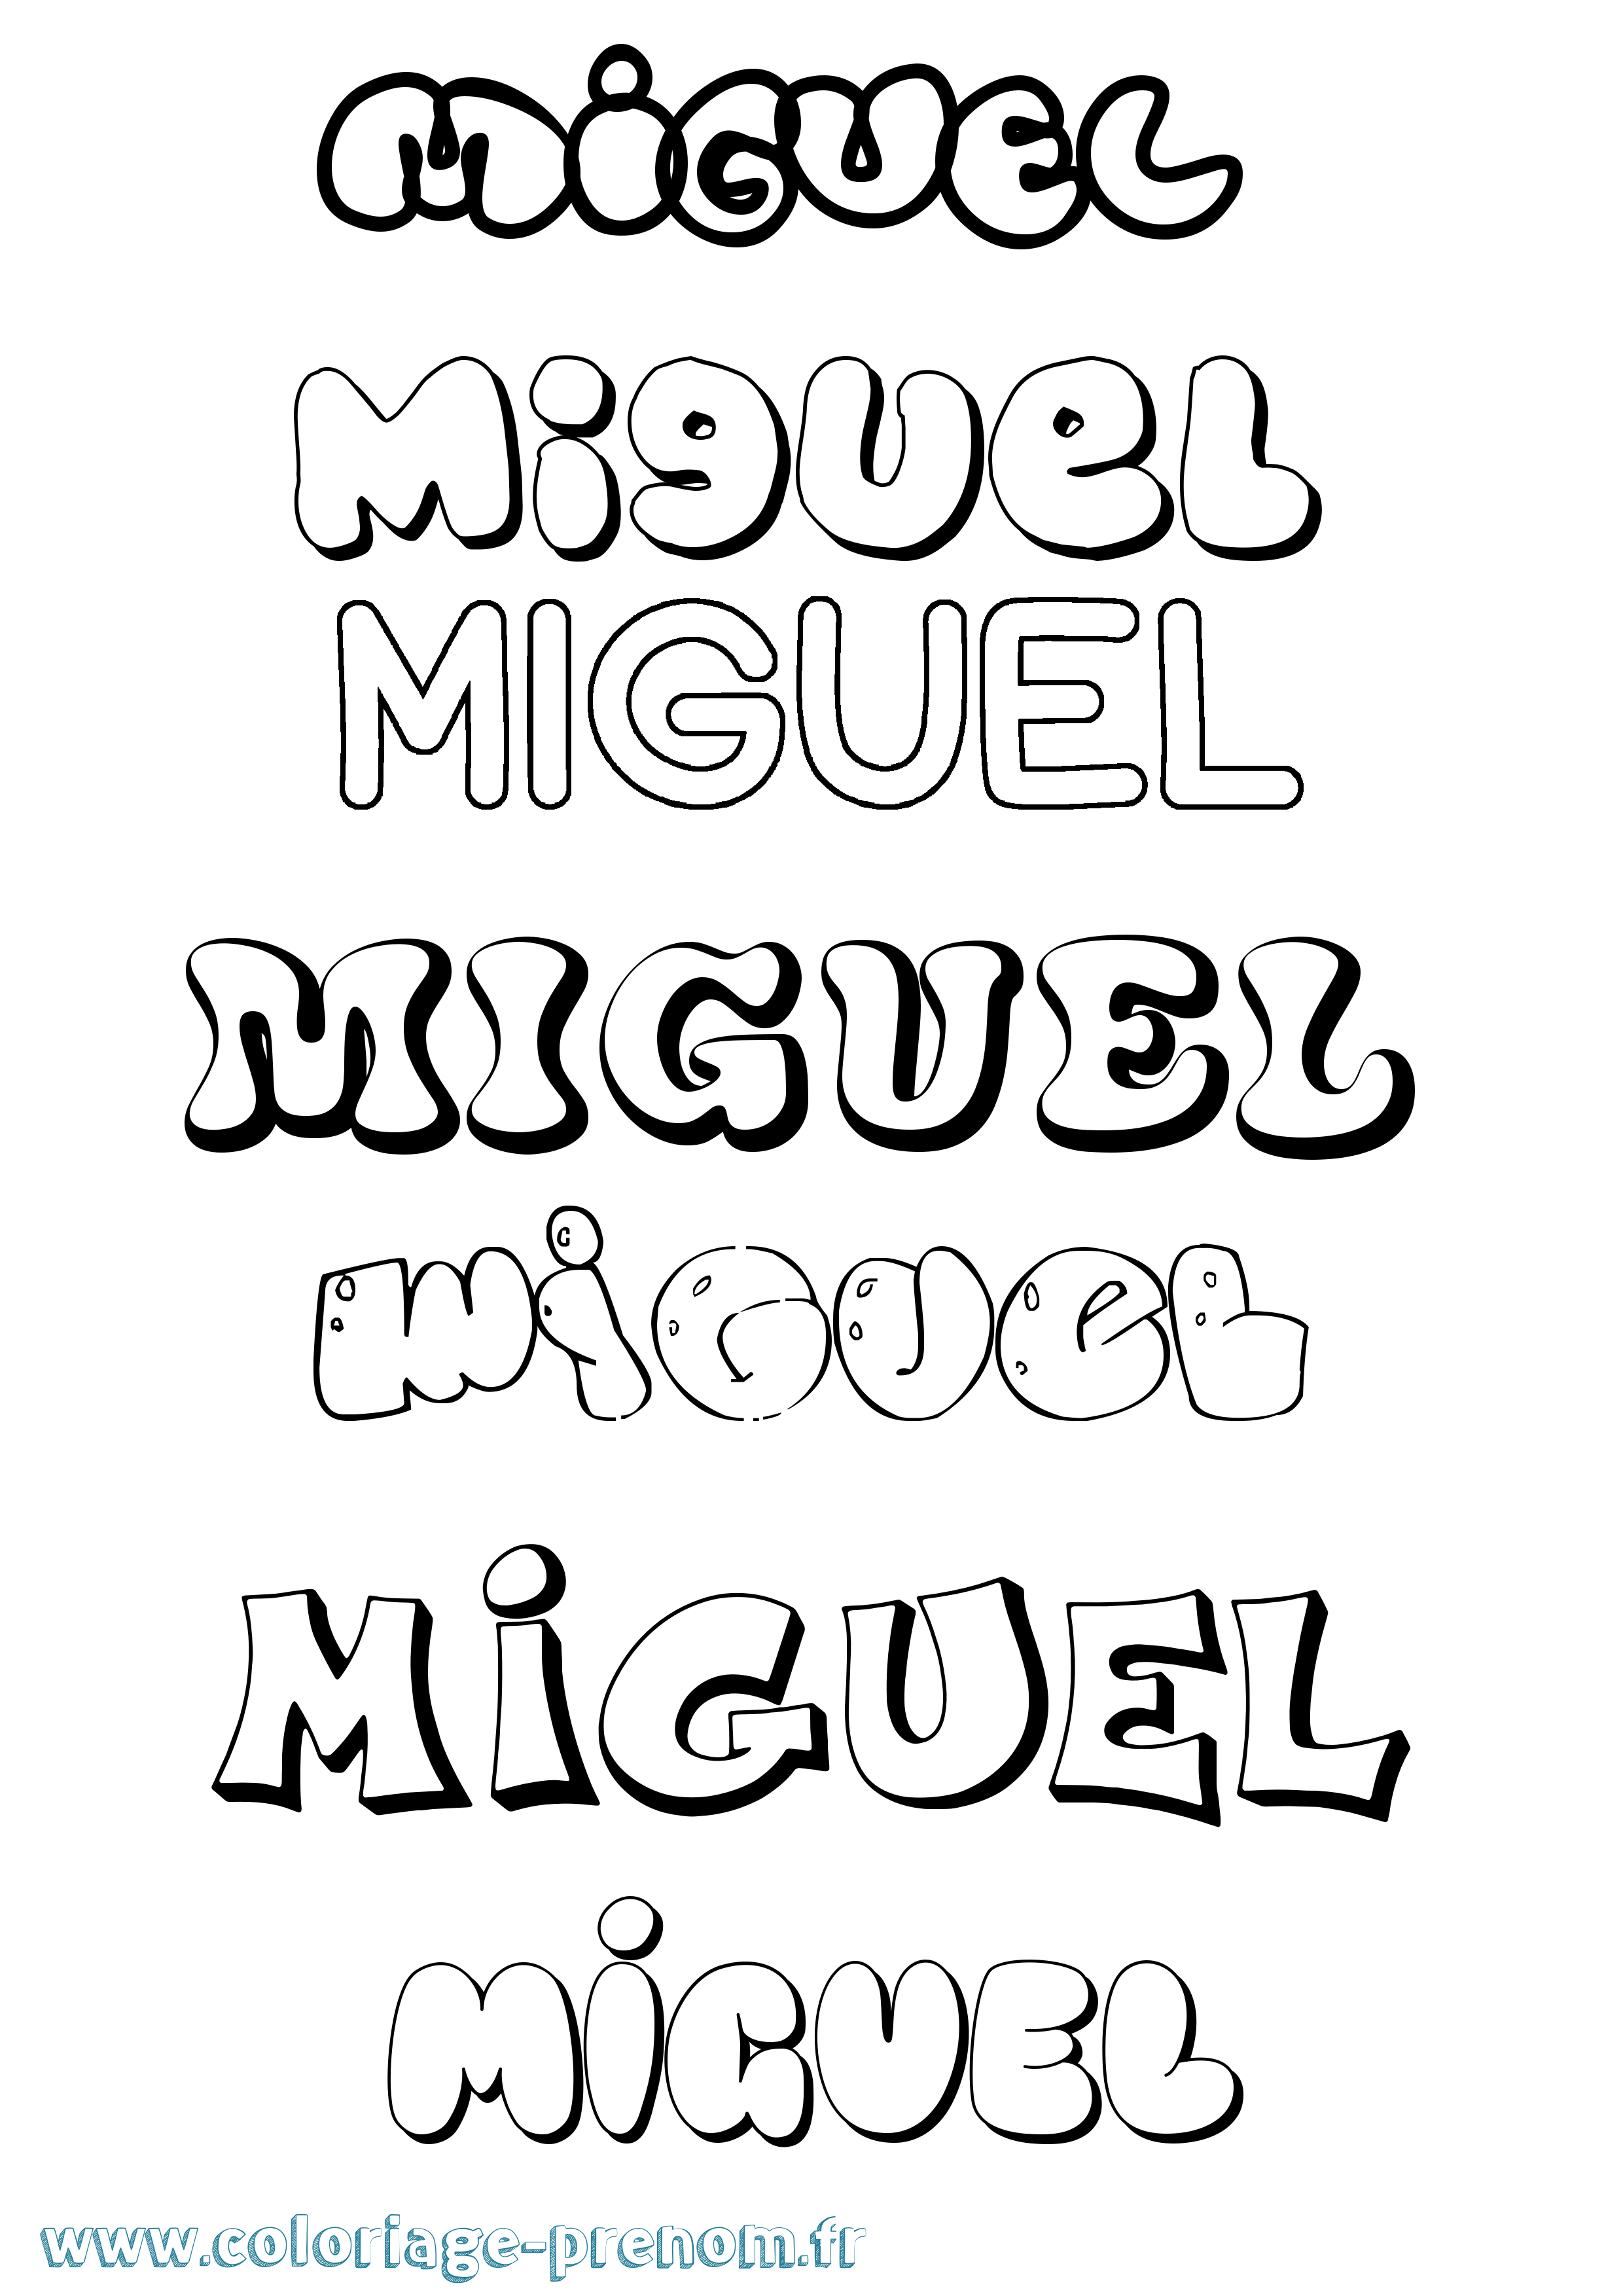 Coloriage prénom Miguel Bubble